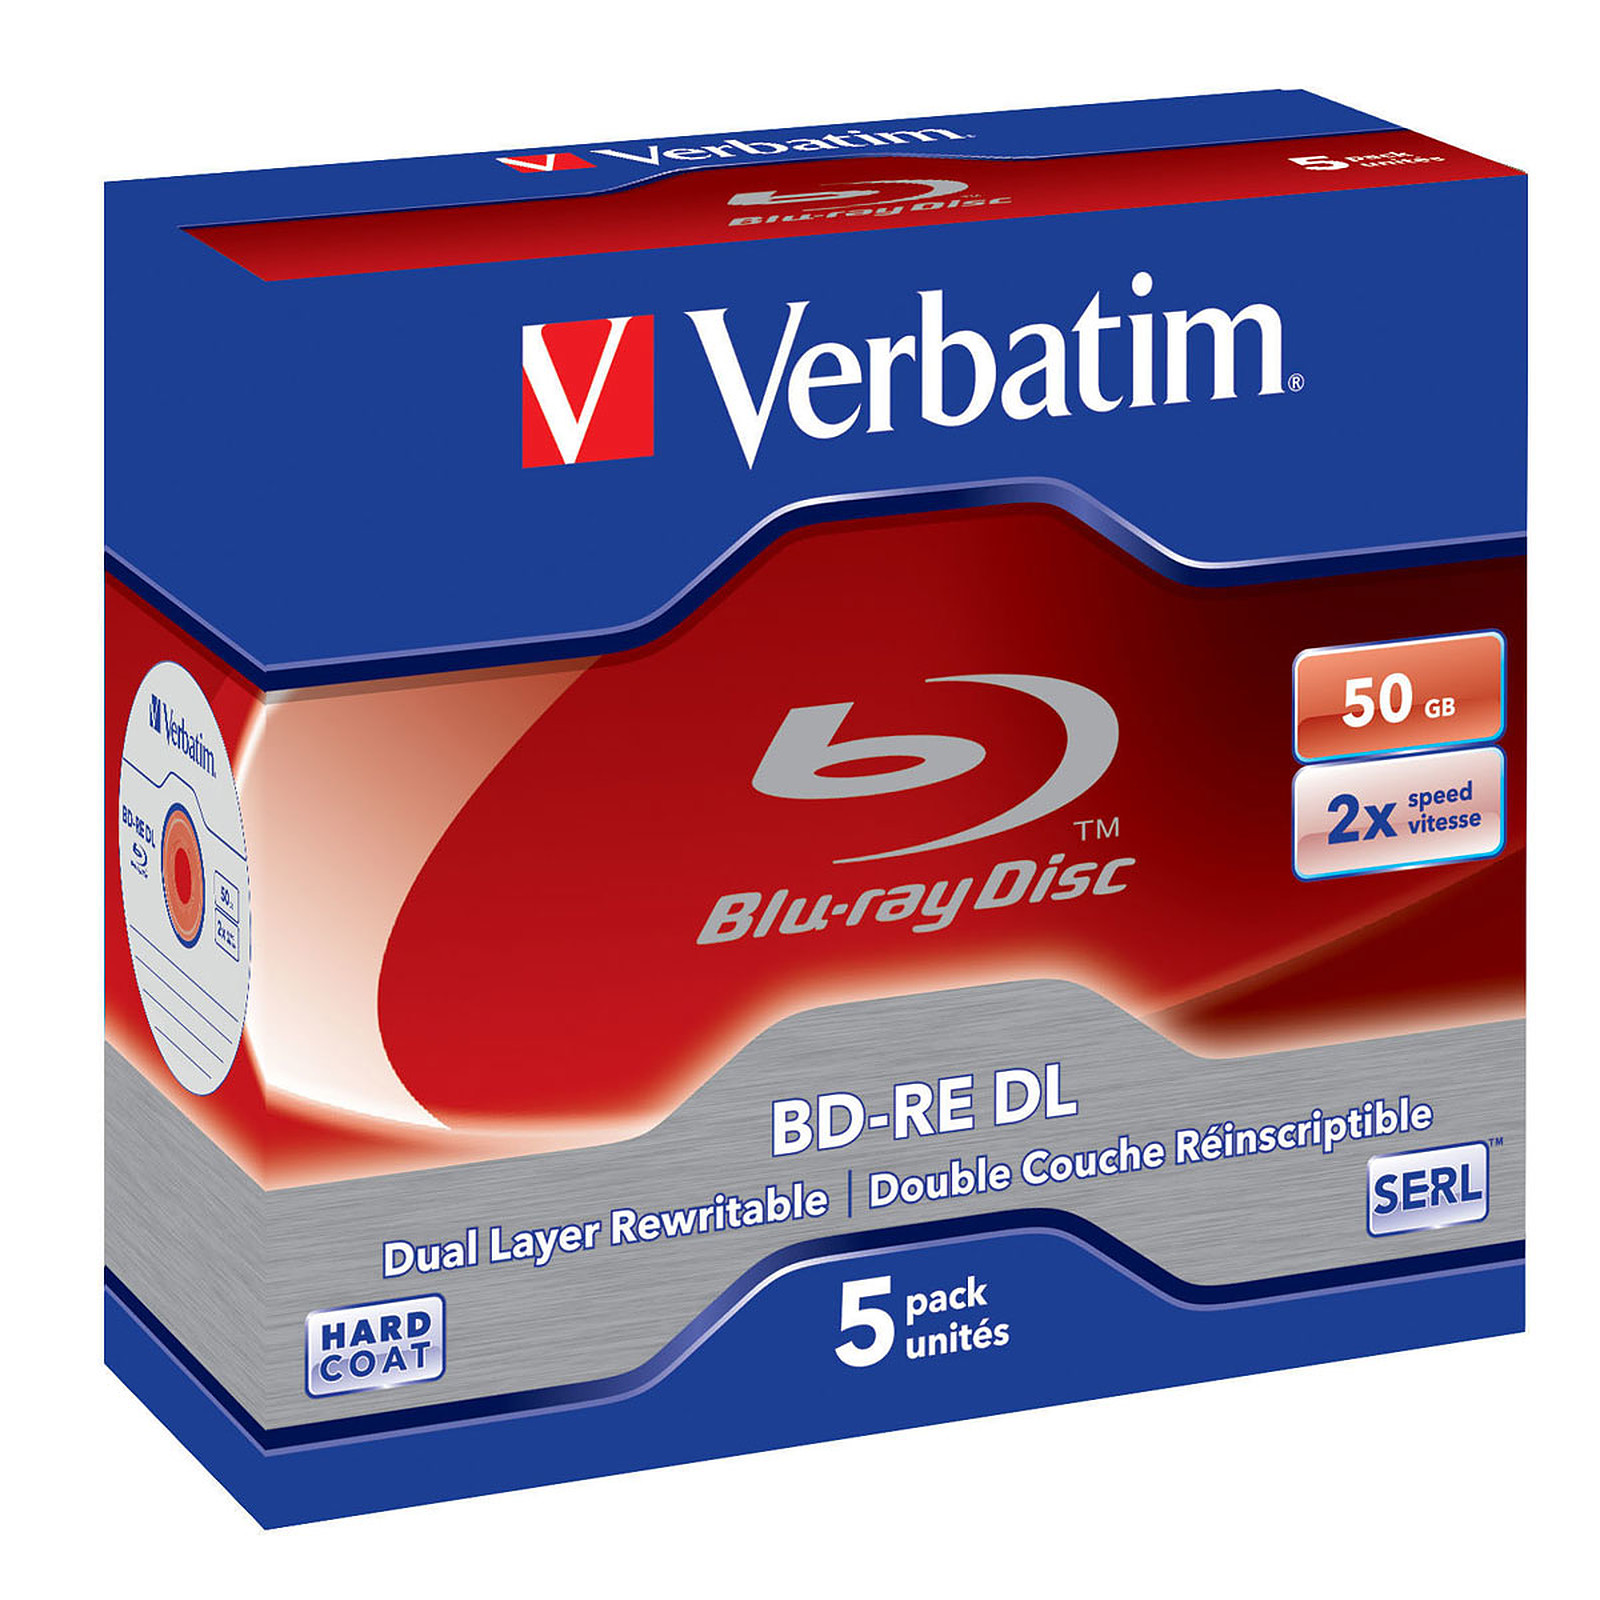 Verbatim BD-RE DL 50 Go 2x (par 5, boite) - Blu-ray vierge Verbatim